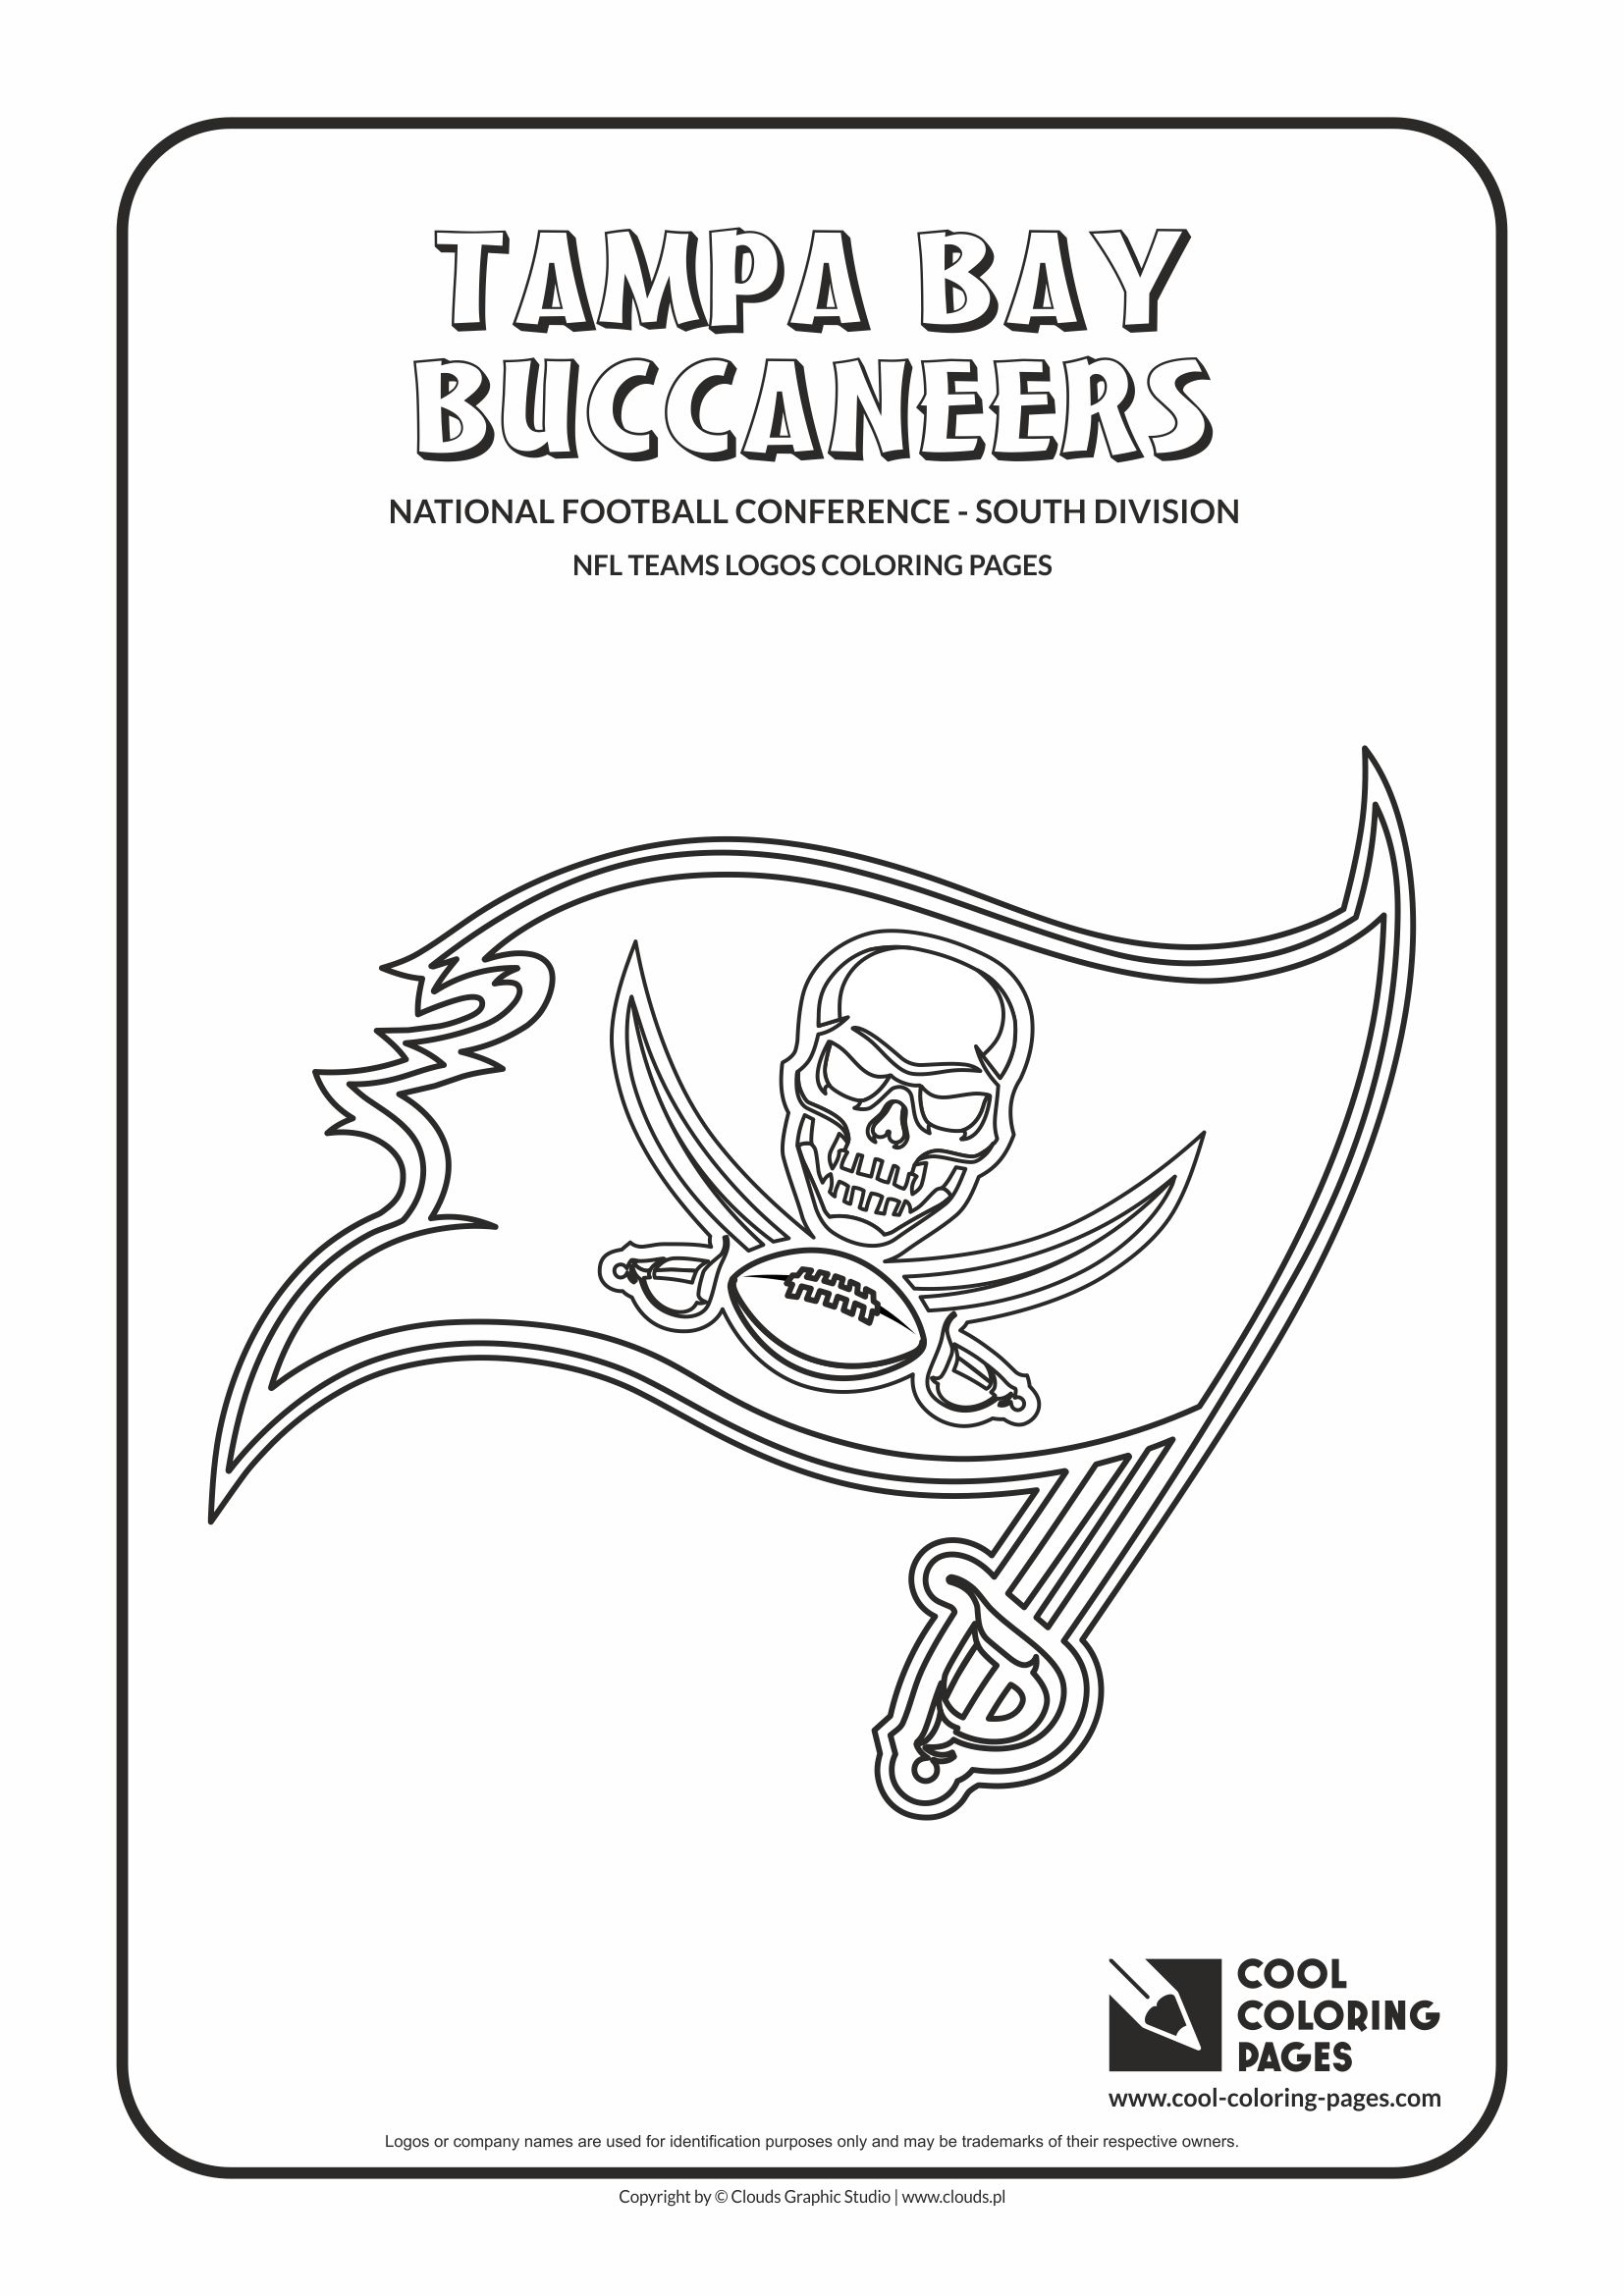 Cool Coloring Pages Tampa Bay Buccaneers - NFL American football teams